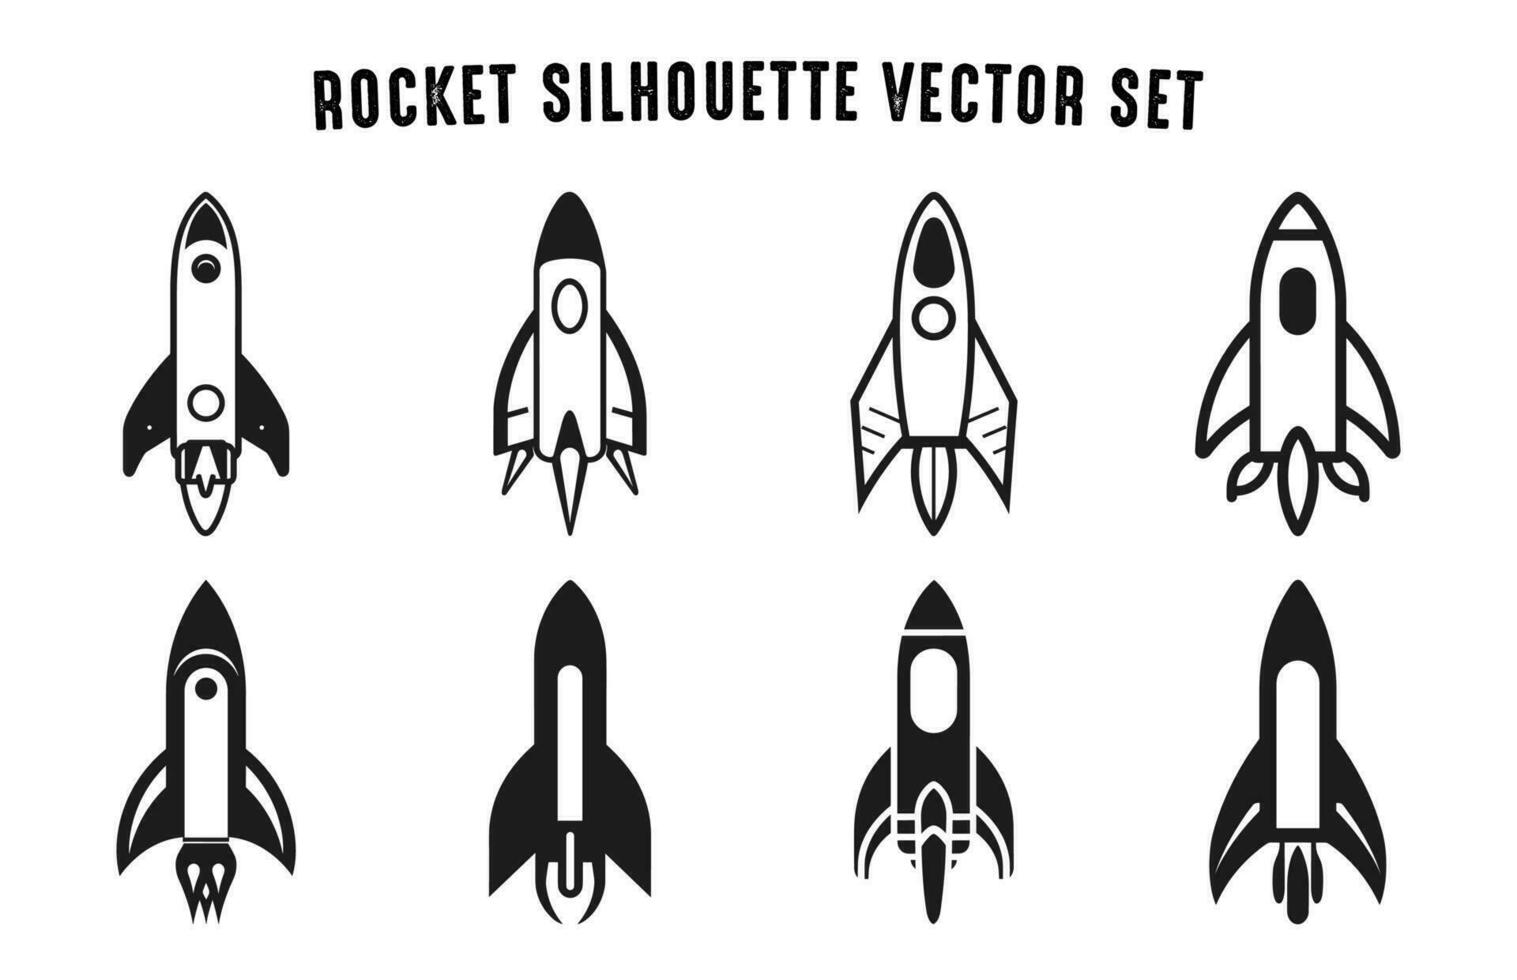 foguete nave espacial silhueta vetor pacote, foguete navio silhuetas vetor conjunto